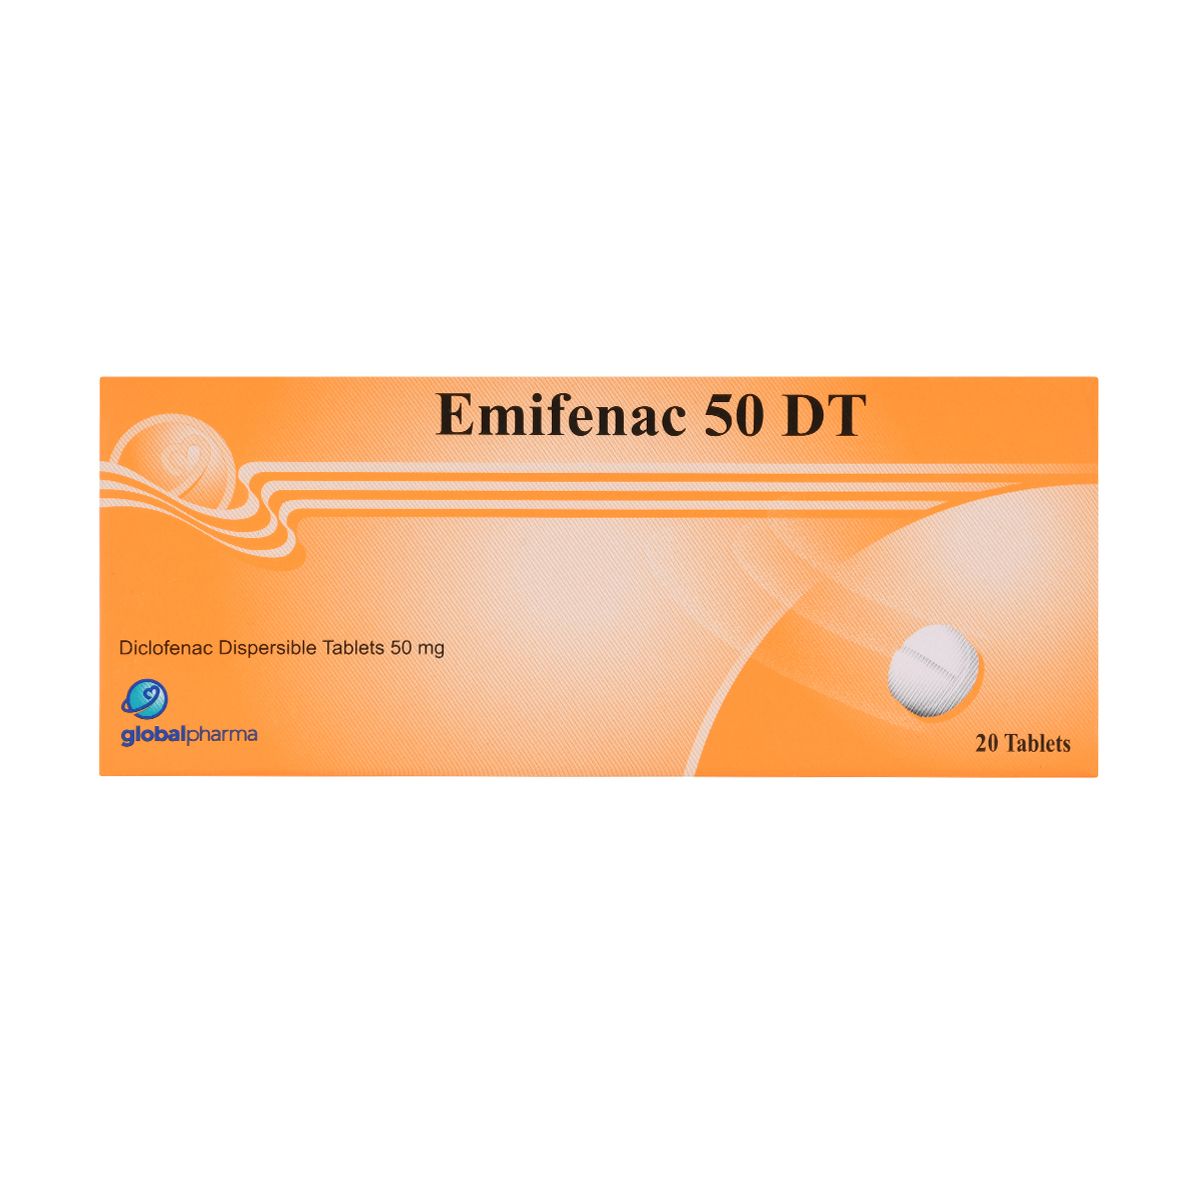 Emifenac 50mg DT